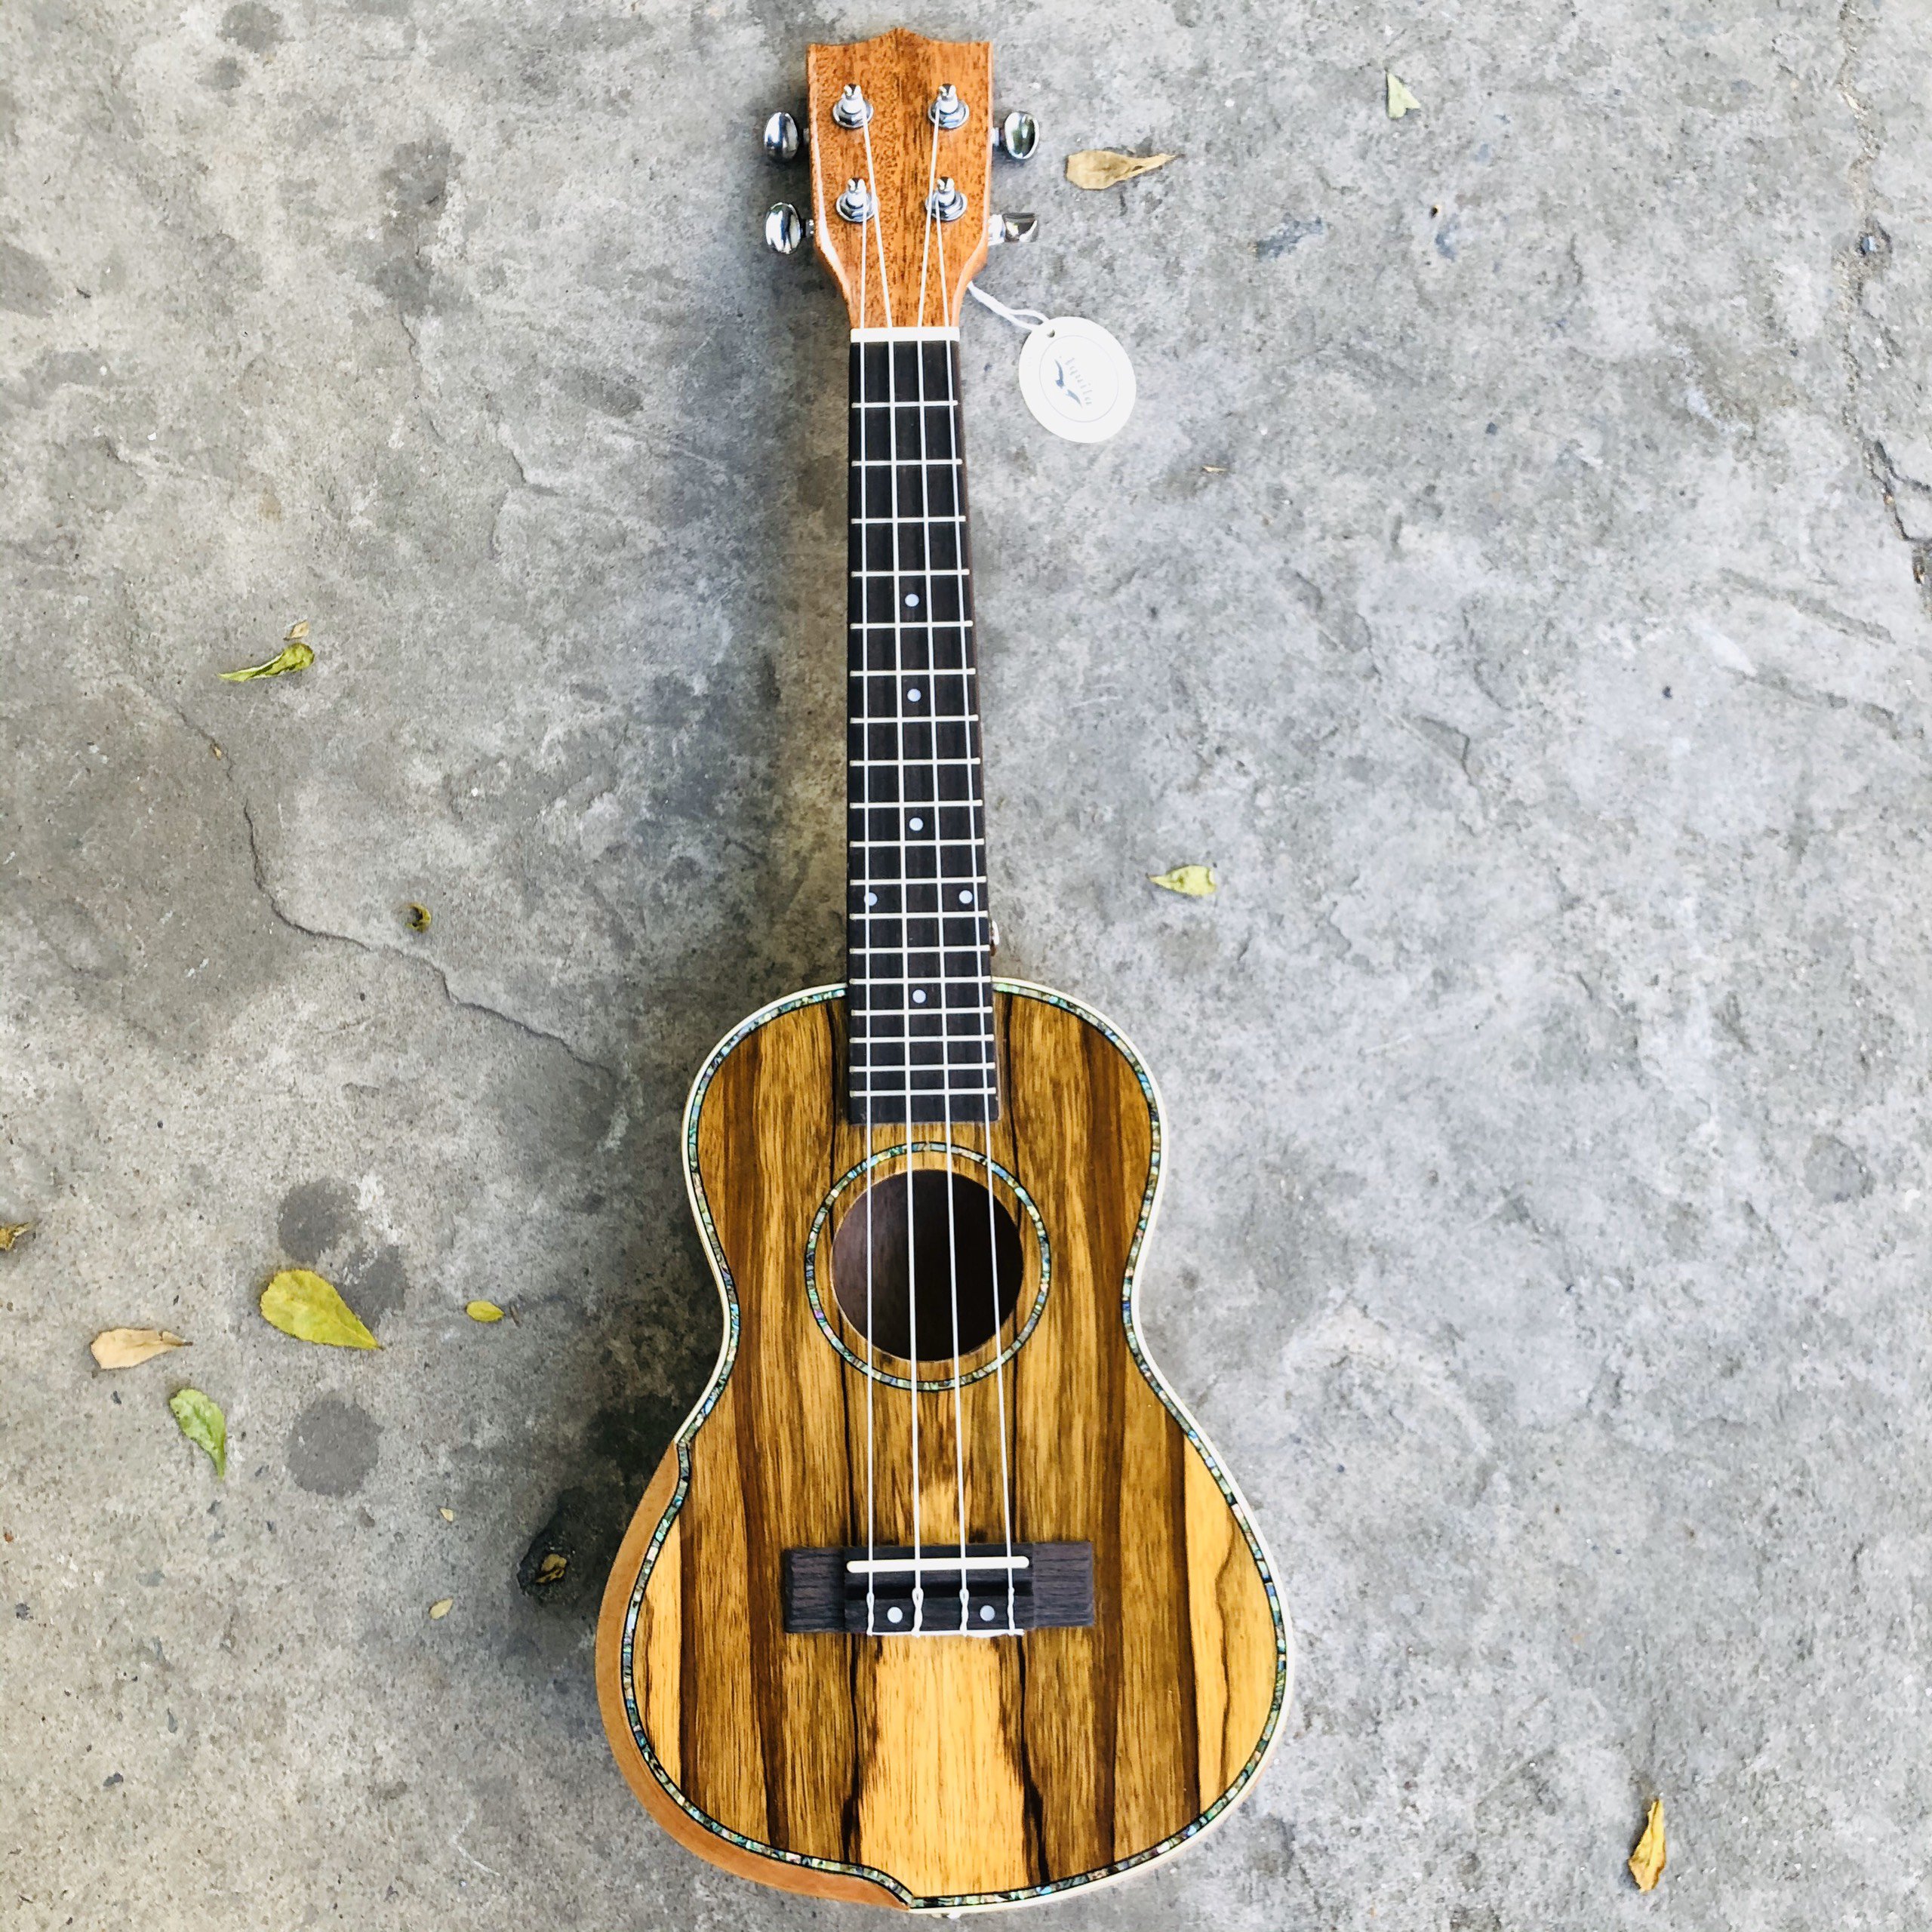 Đàn ukulele gỗ cocobolo cao cấp size concert - vân gỗ đẹp từ HCM